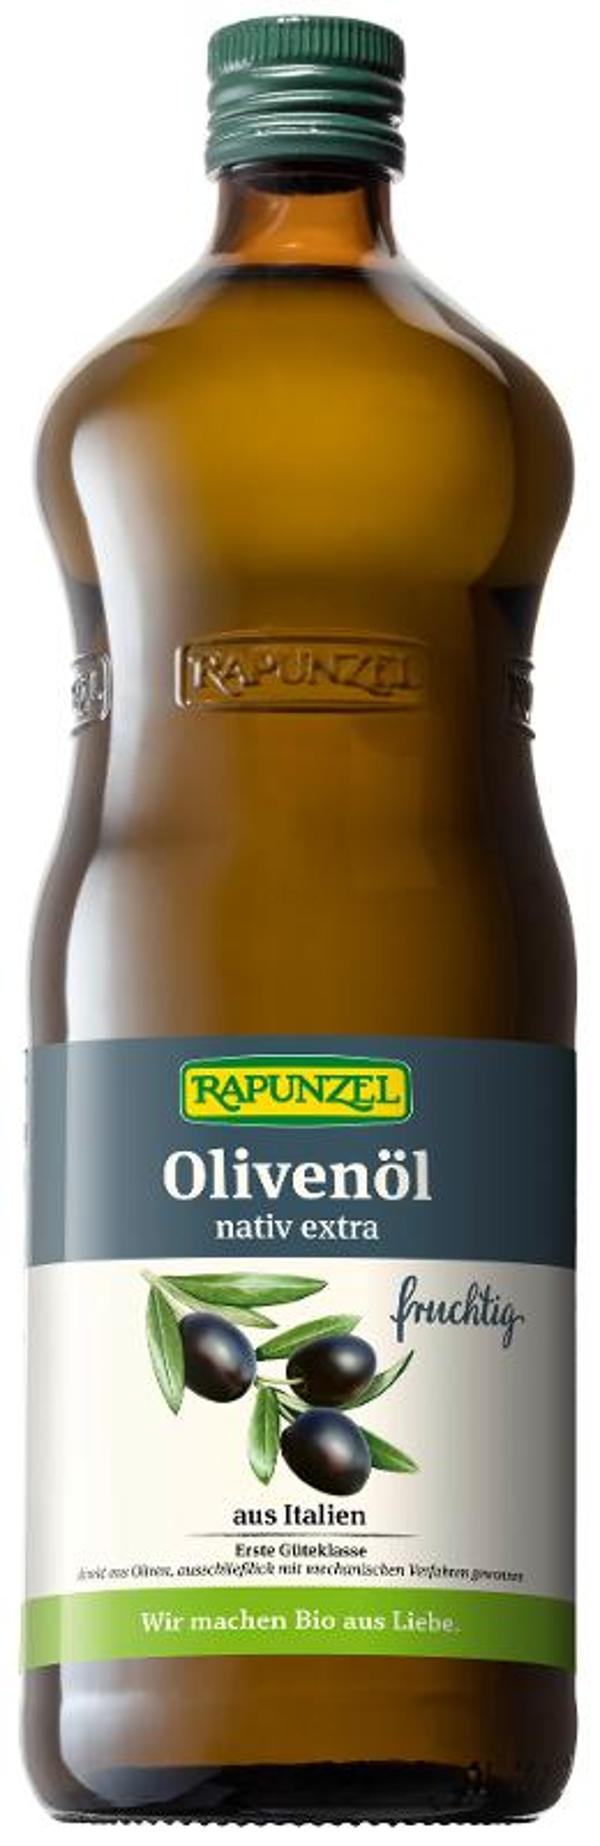 Produktfoto zu Rapunzel Olivenöl fruchtig, nativ extra - 1l